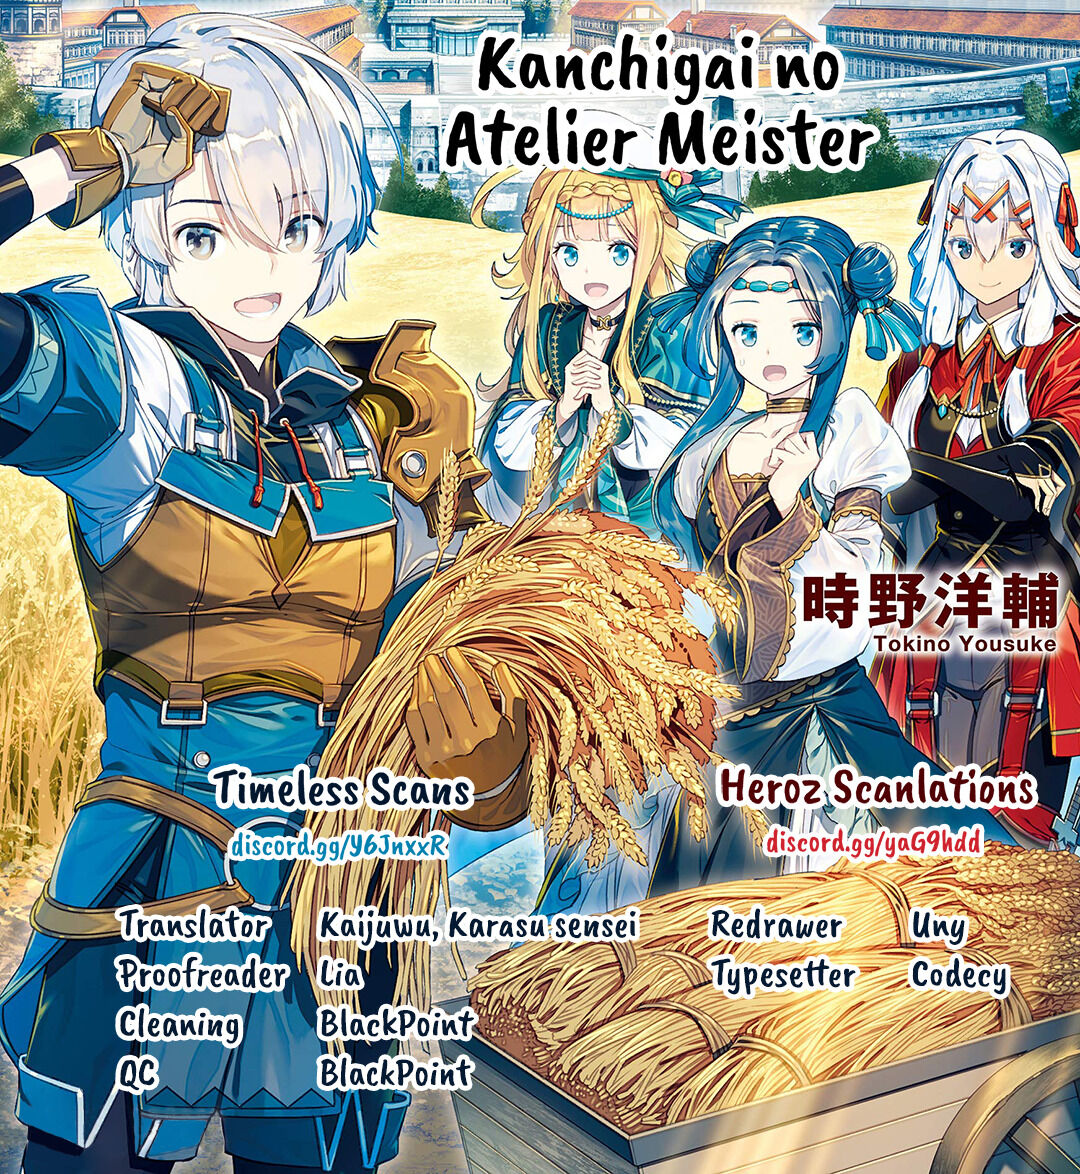 Kanchigai no Atelier Master - Chapter 7471 - Everyone's Own Battles - Image 1